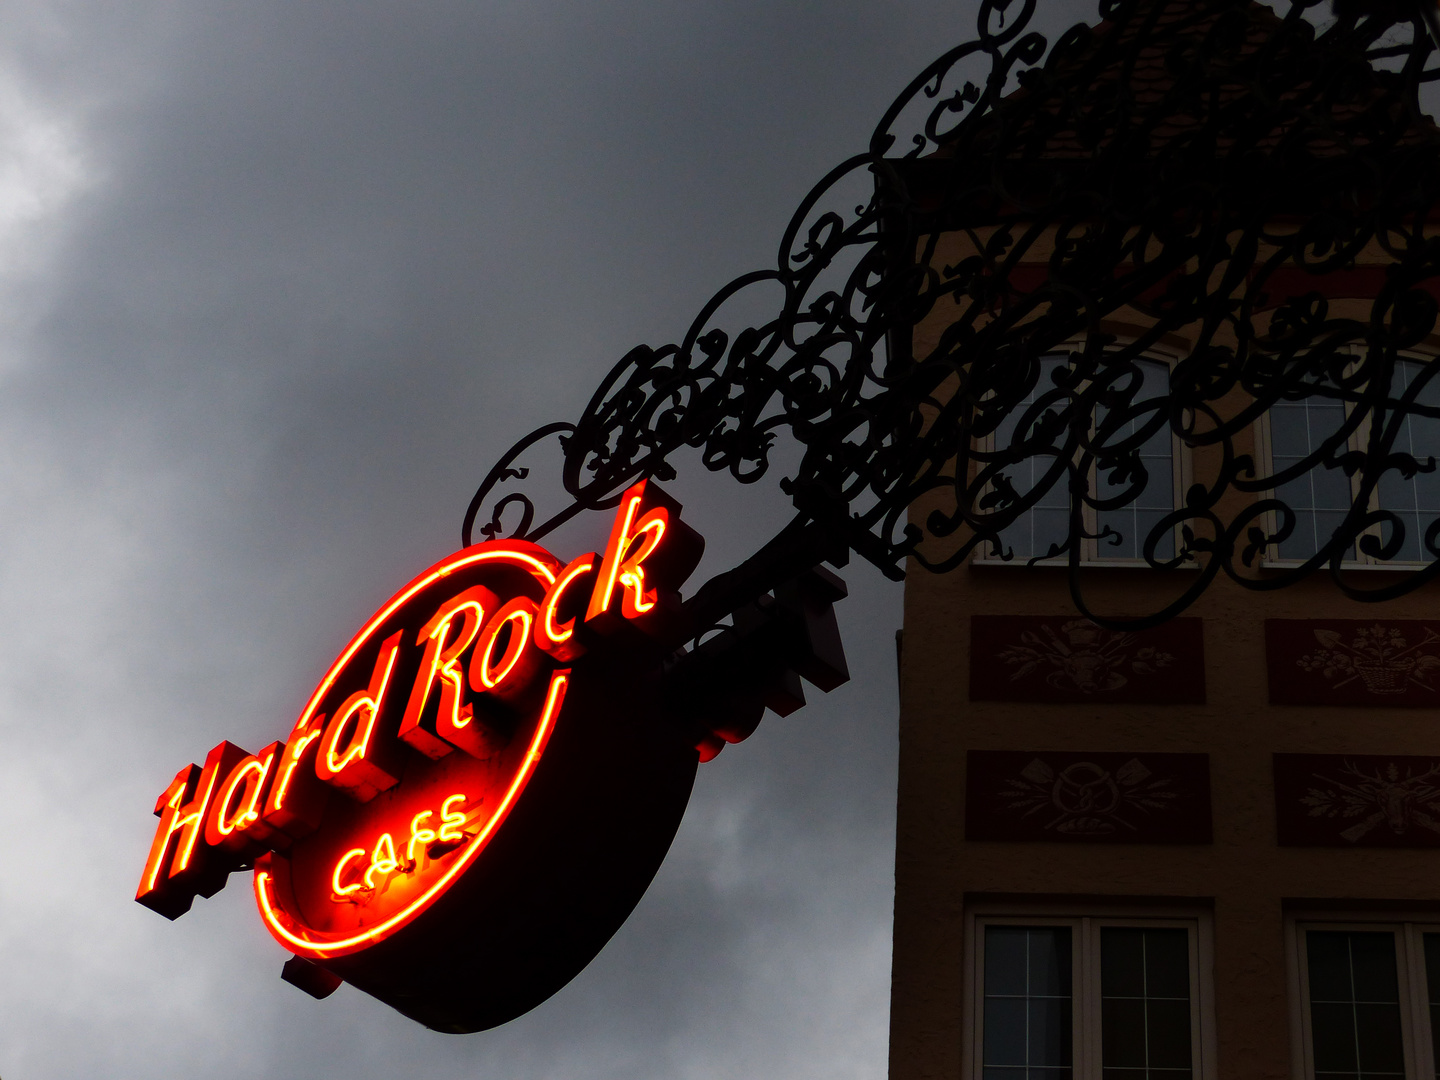 Hard Rock Cafe München